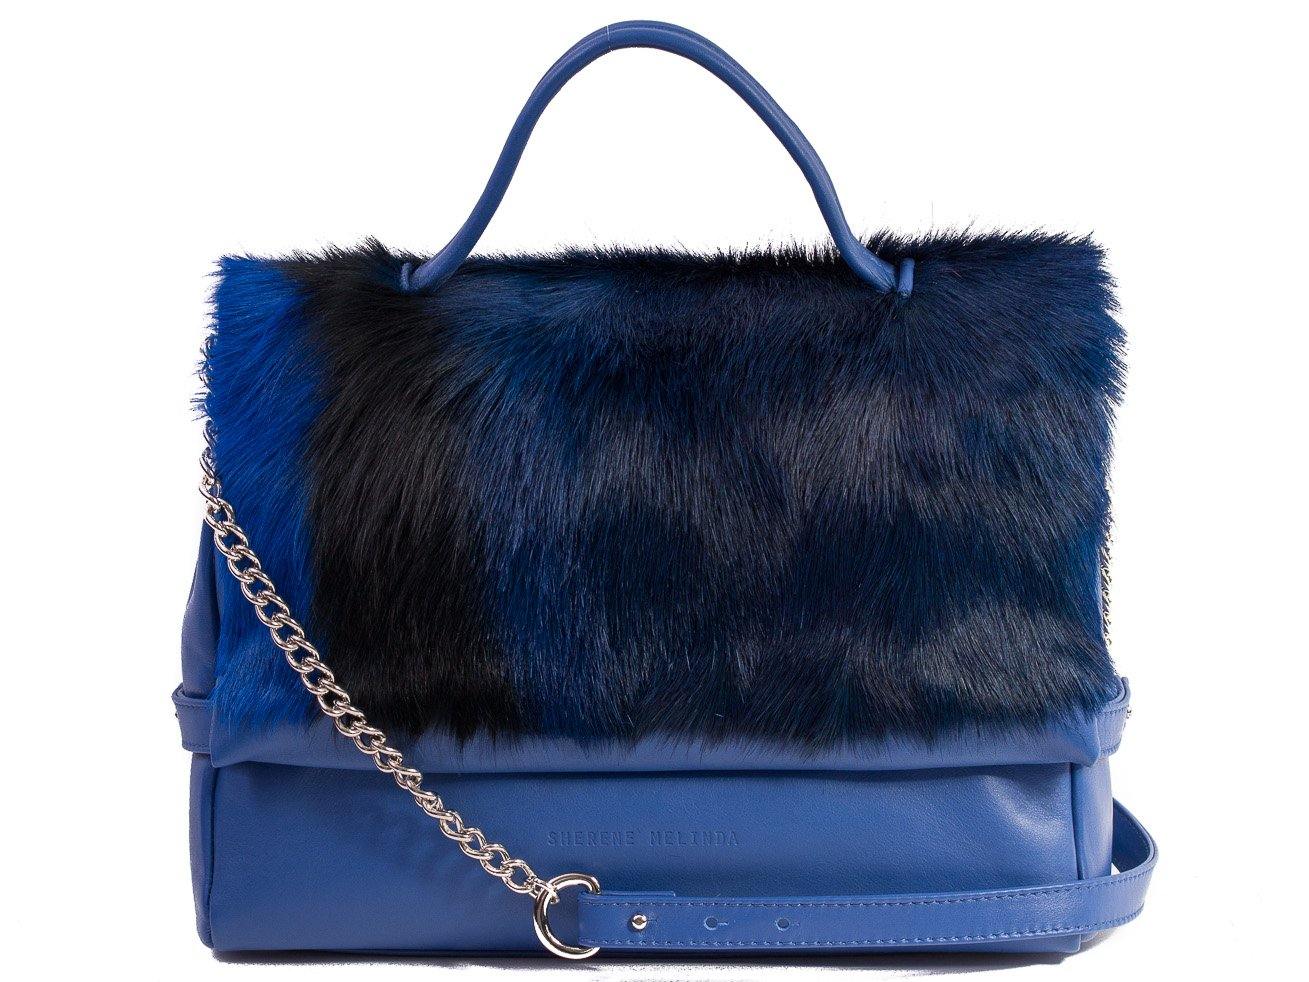 sherene melinda springbok hair-on-hide royal blue leather smith tote bag stripe front strap